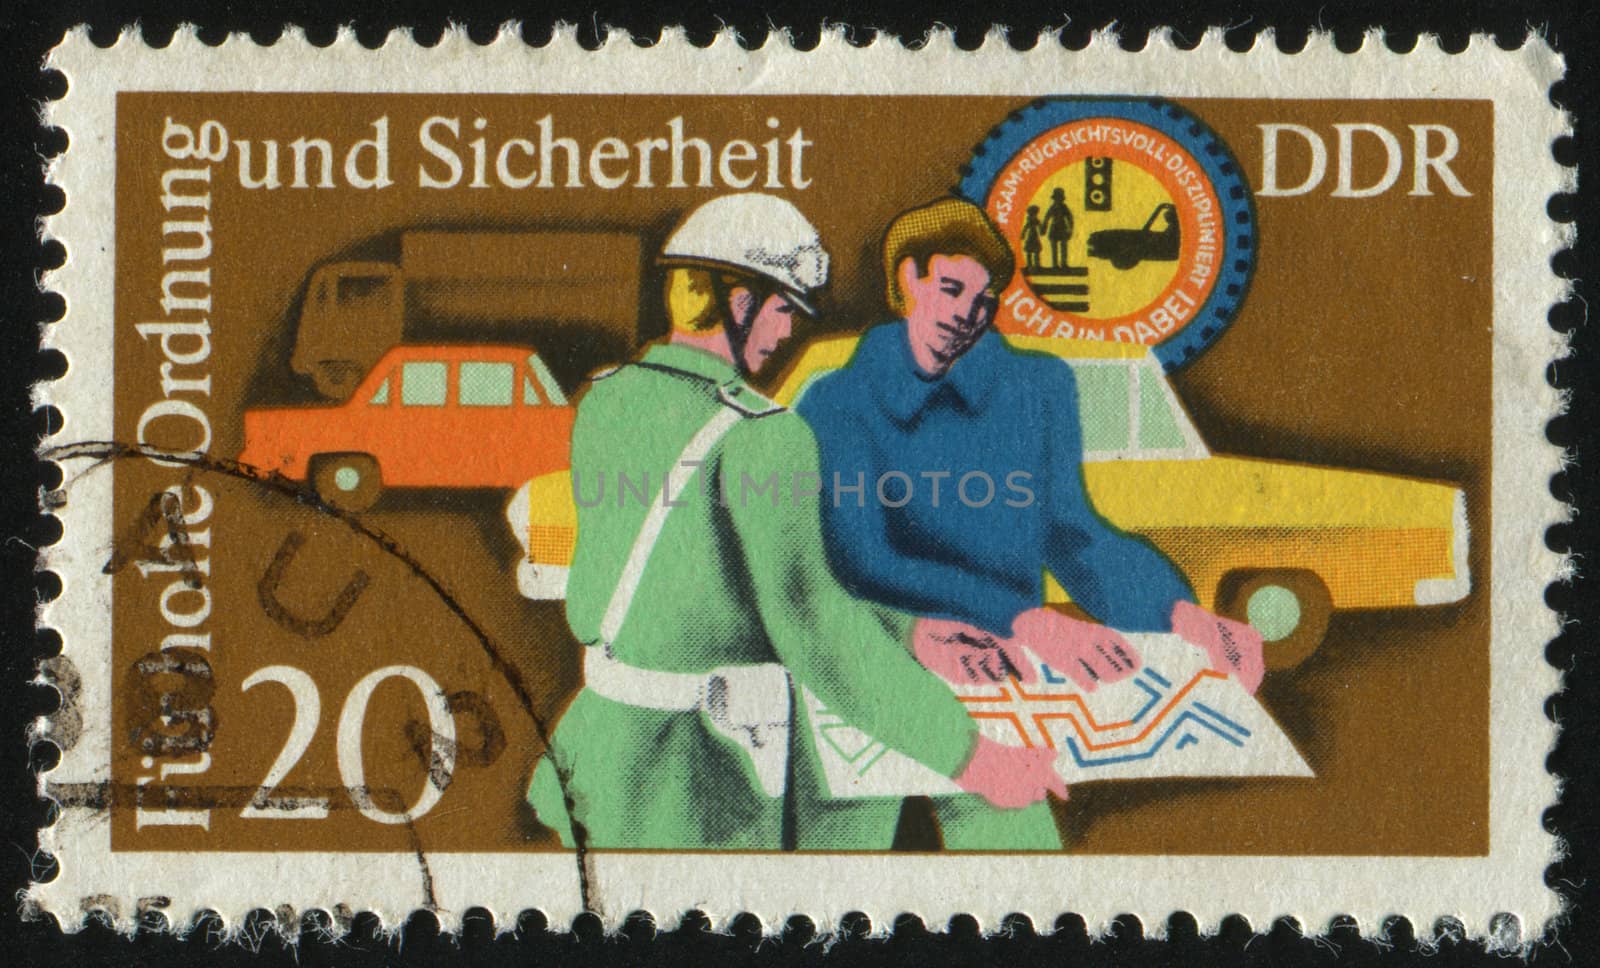 GERMANY- CIRCA 1975: stamp printed by Germany, shows policeman helping motorist, circa 1975.